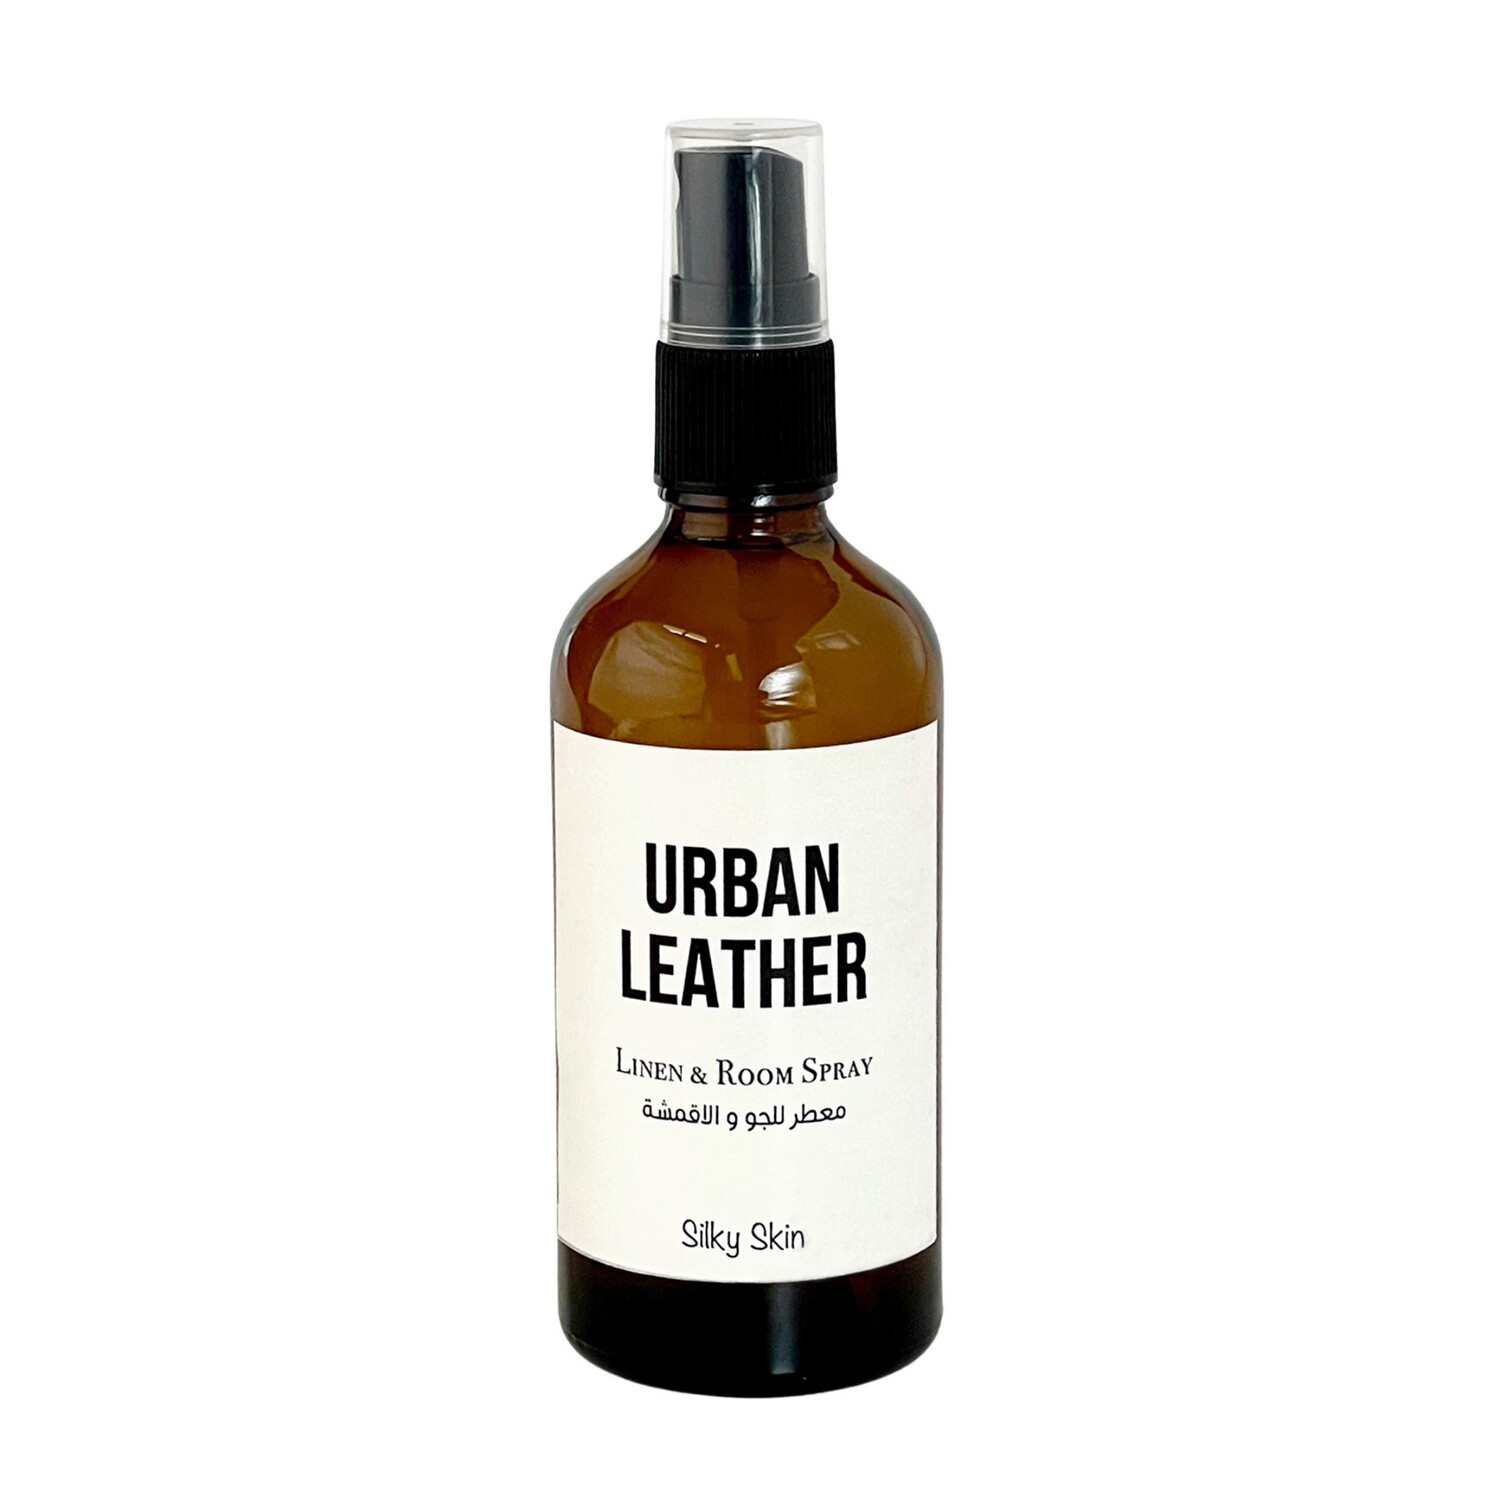 Urban Leather Room & Linen Spray